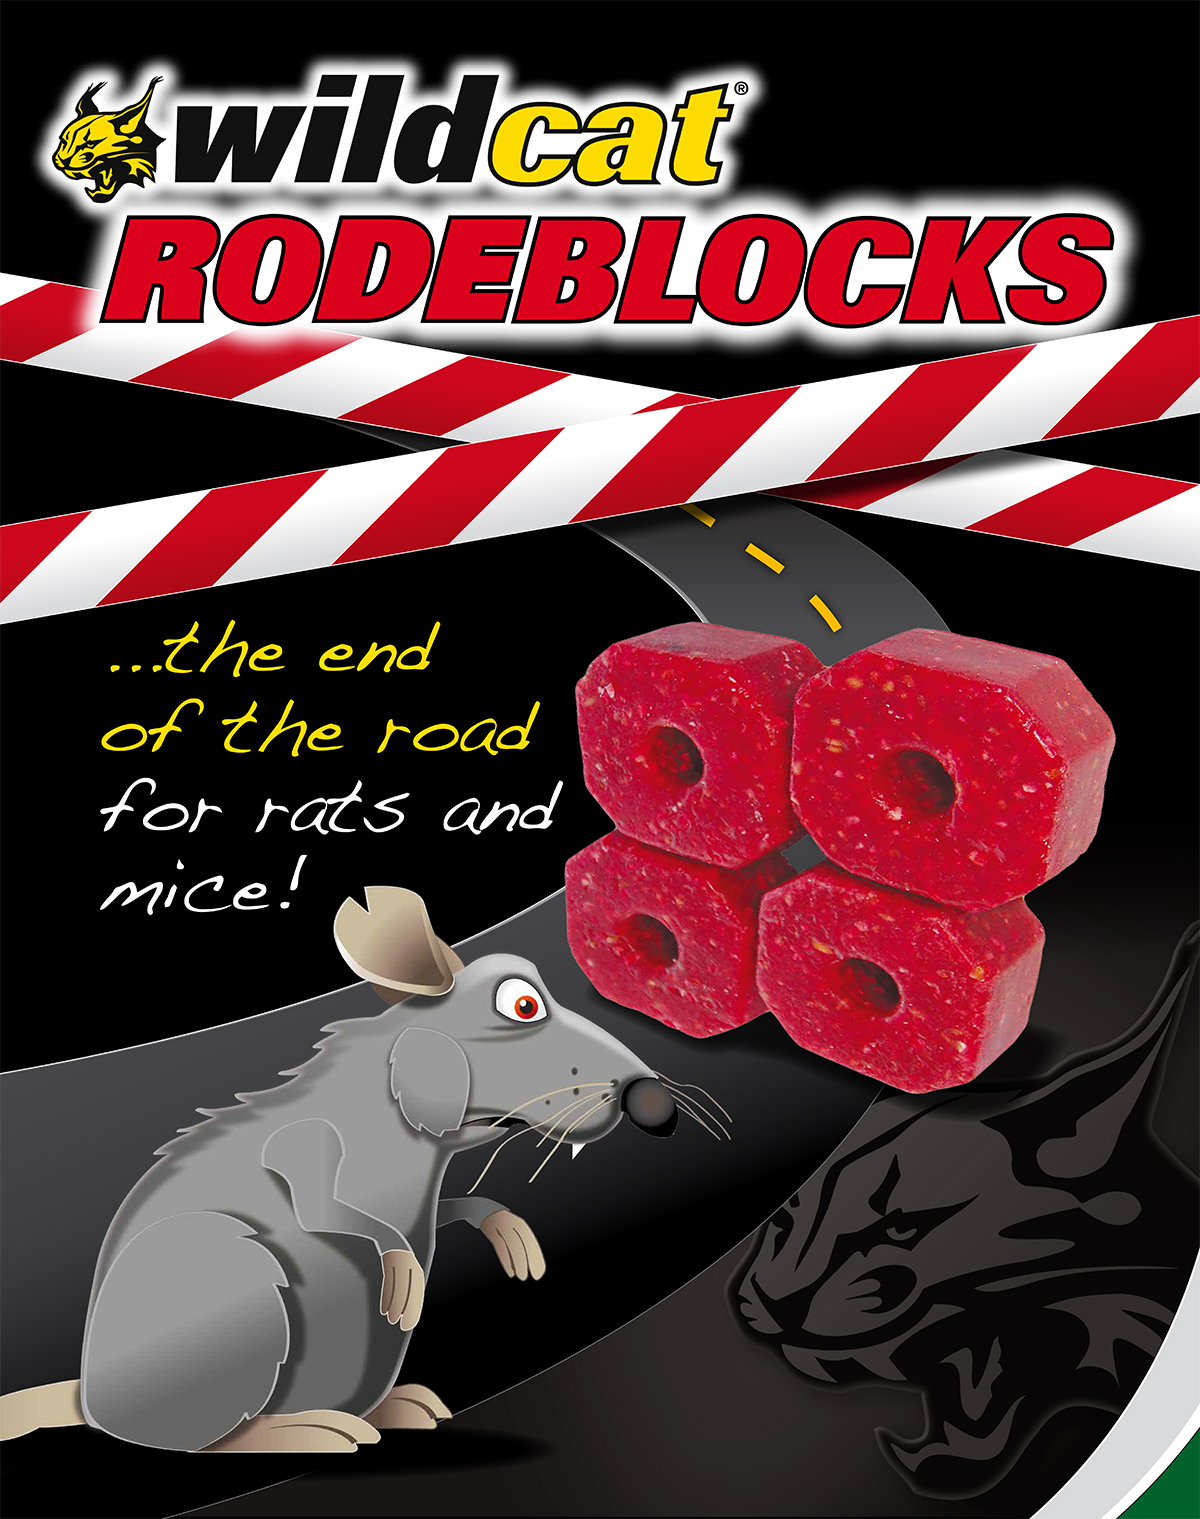 RodeBlocks